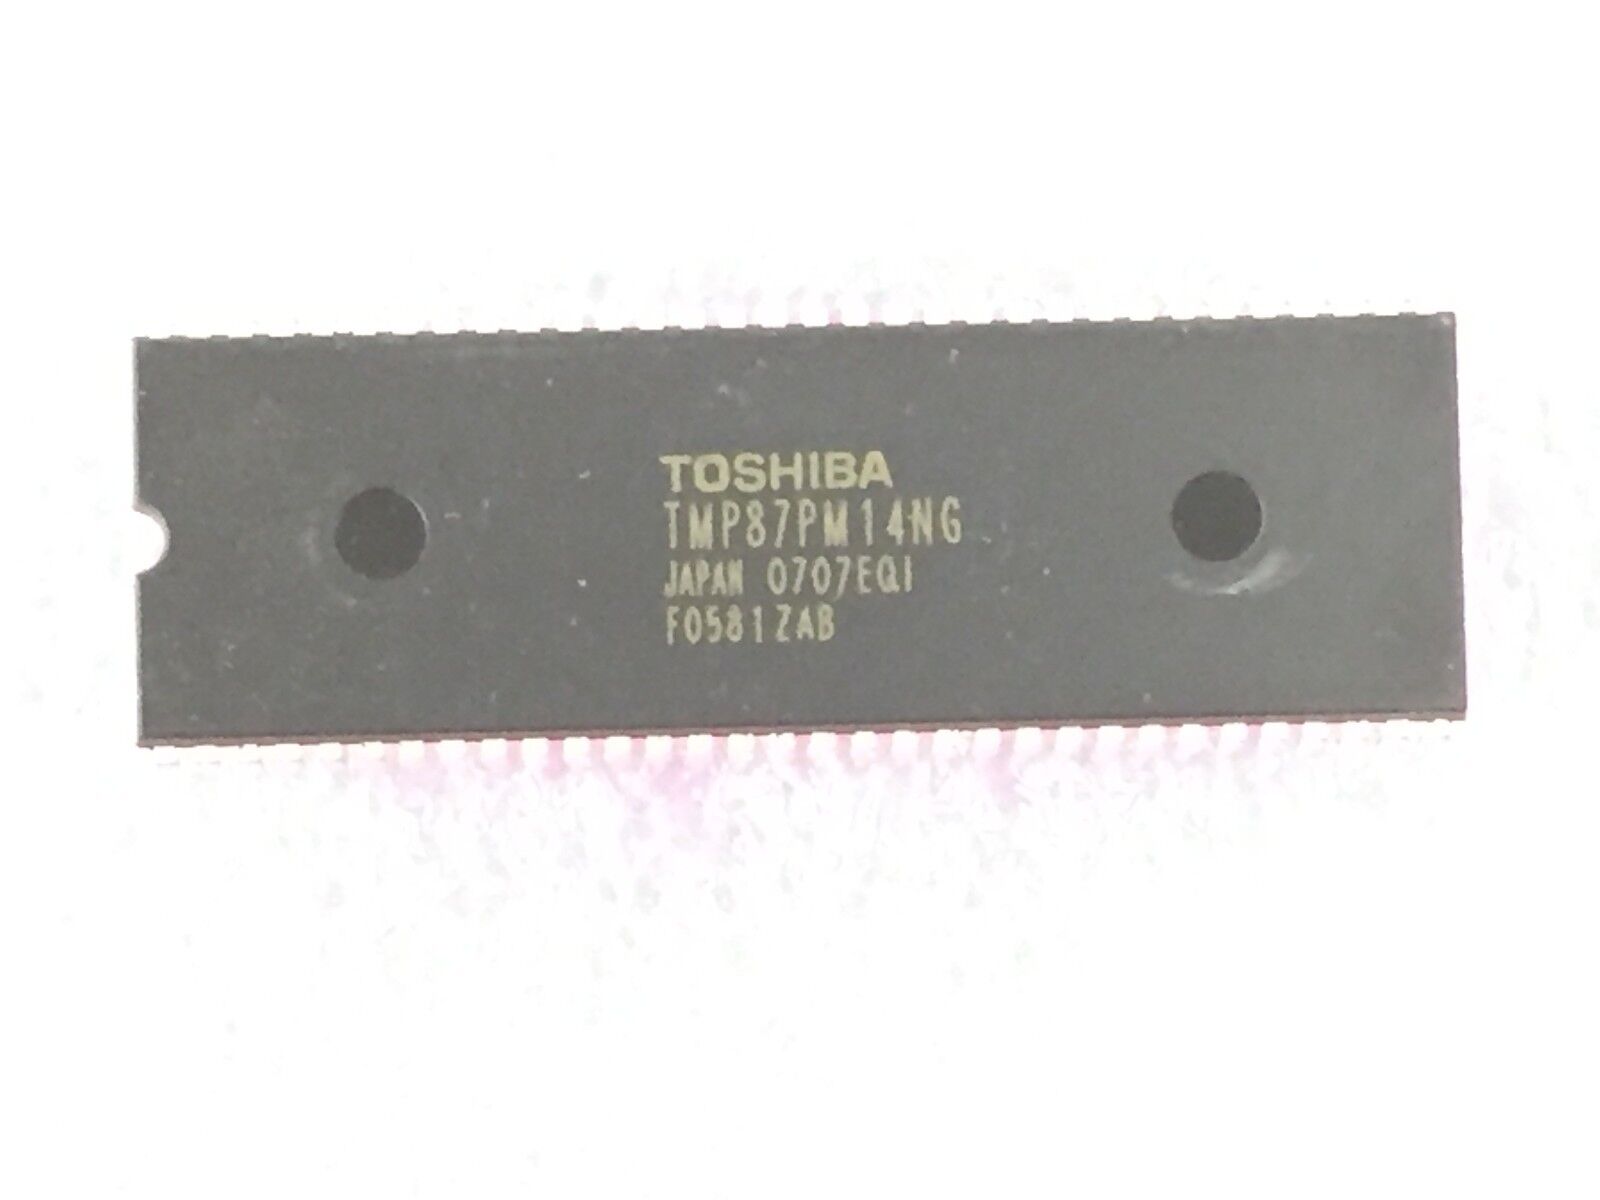 Toshiba TMP87PM14NG CMOS 8-Bit Microcontroller Lot of 8